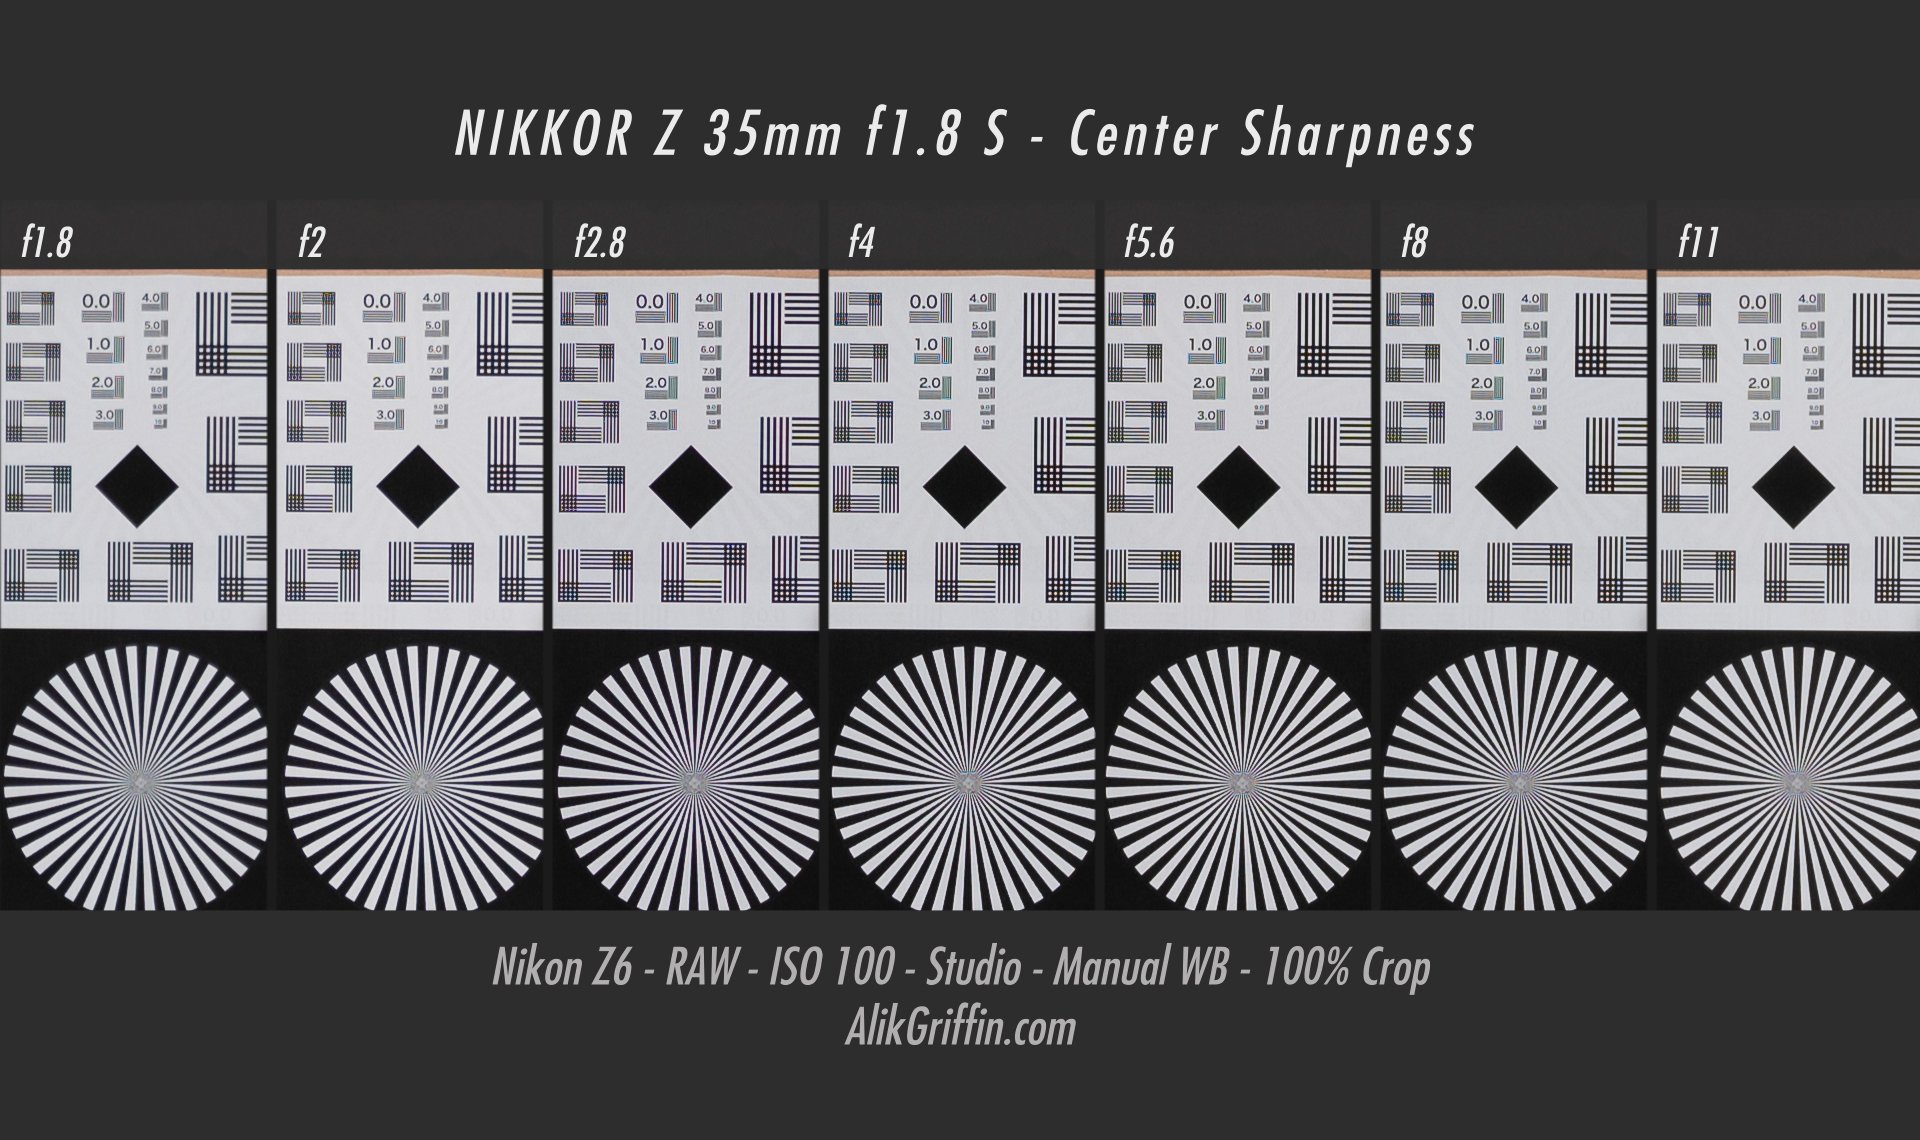 Nikon 35mm f1.8 S Center Sharpness